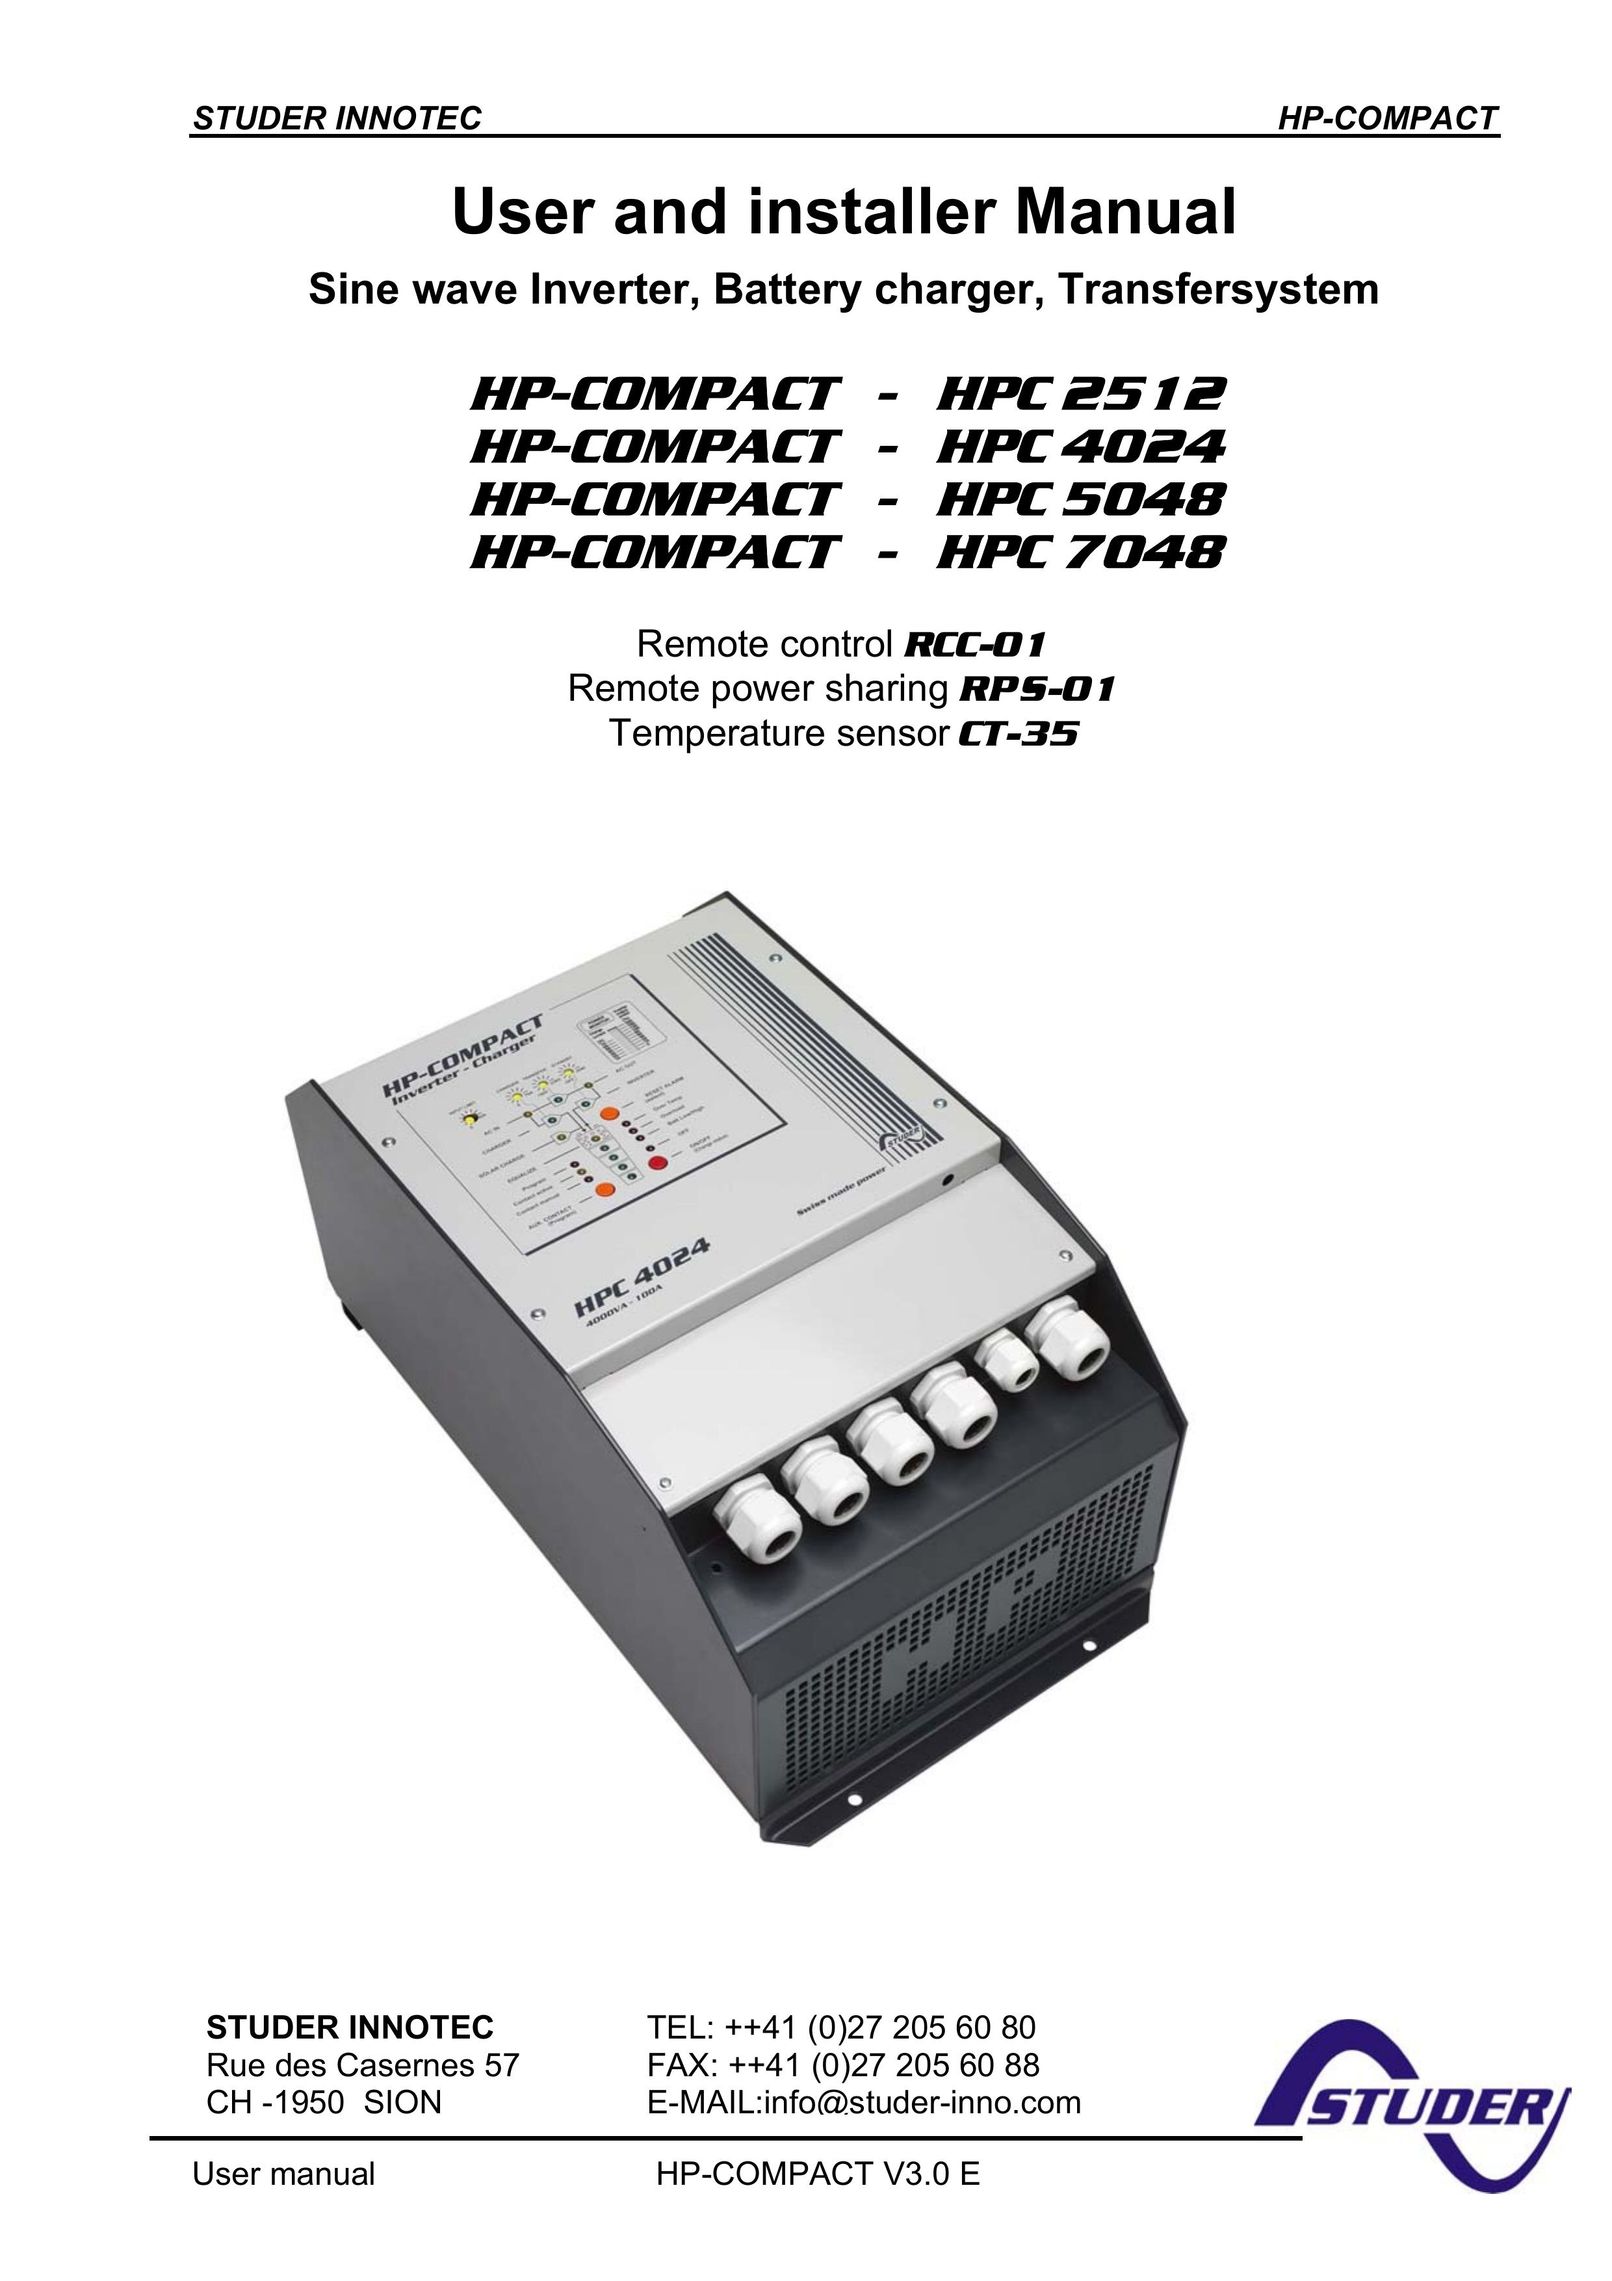 Studer Innotec HPC7048 Battery Charger User Manual